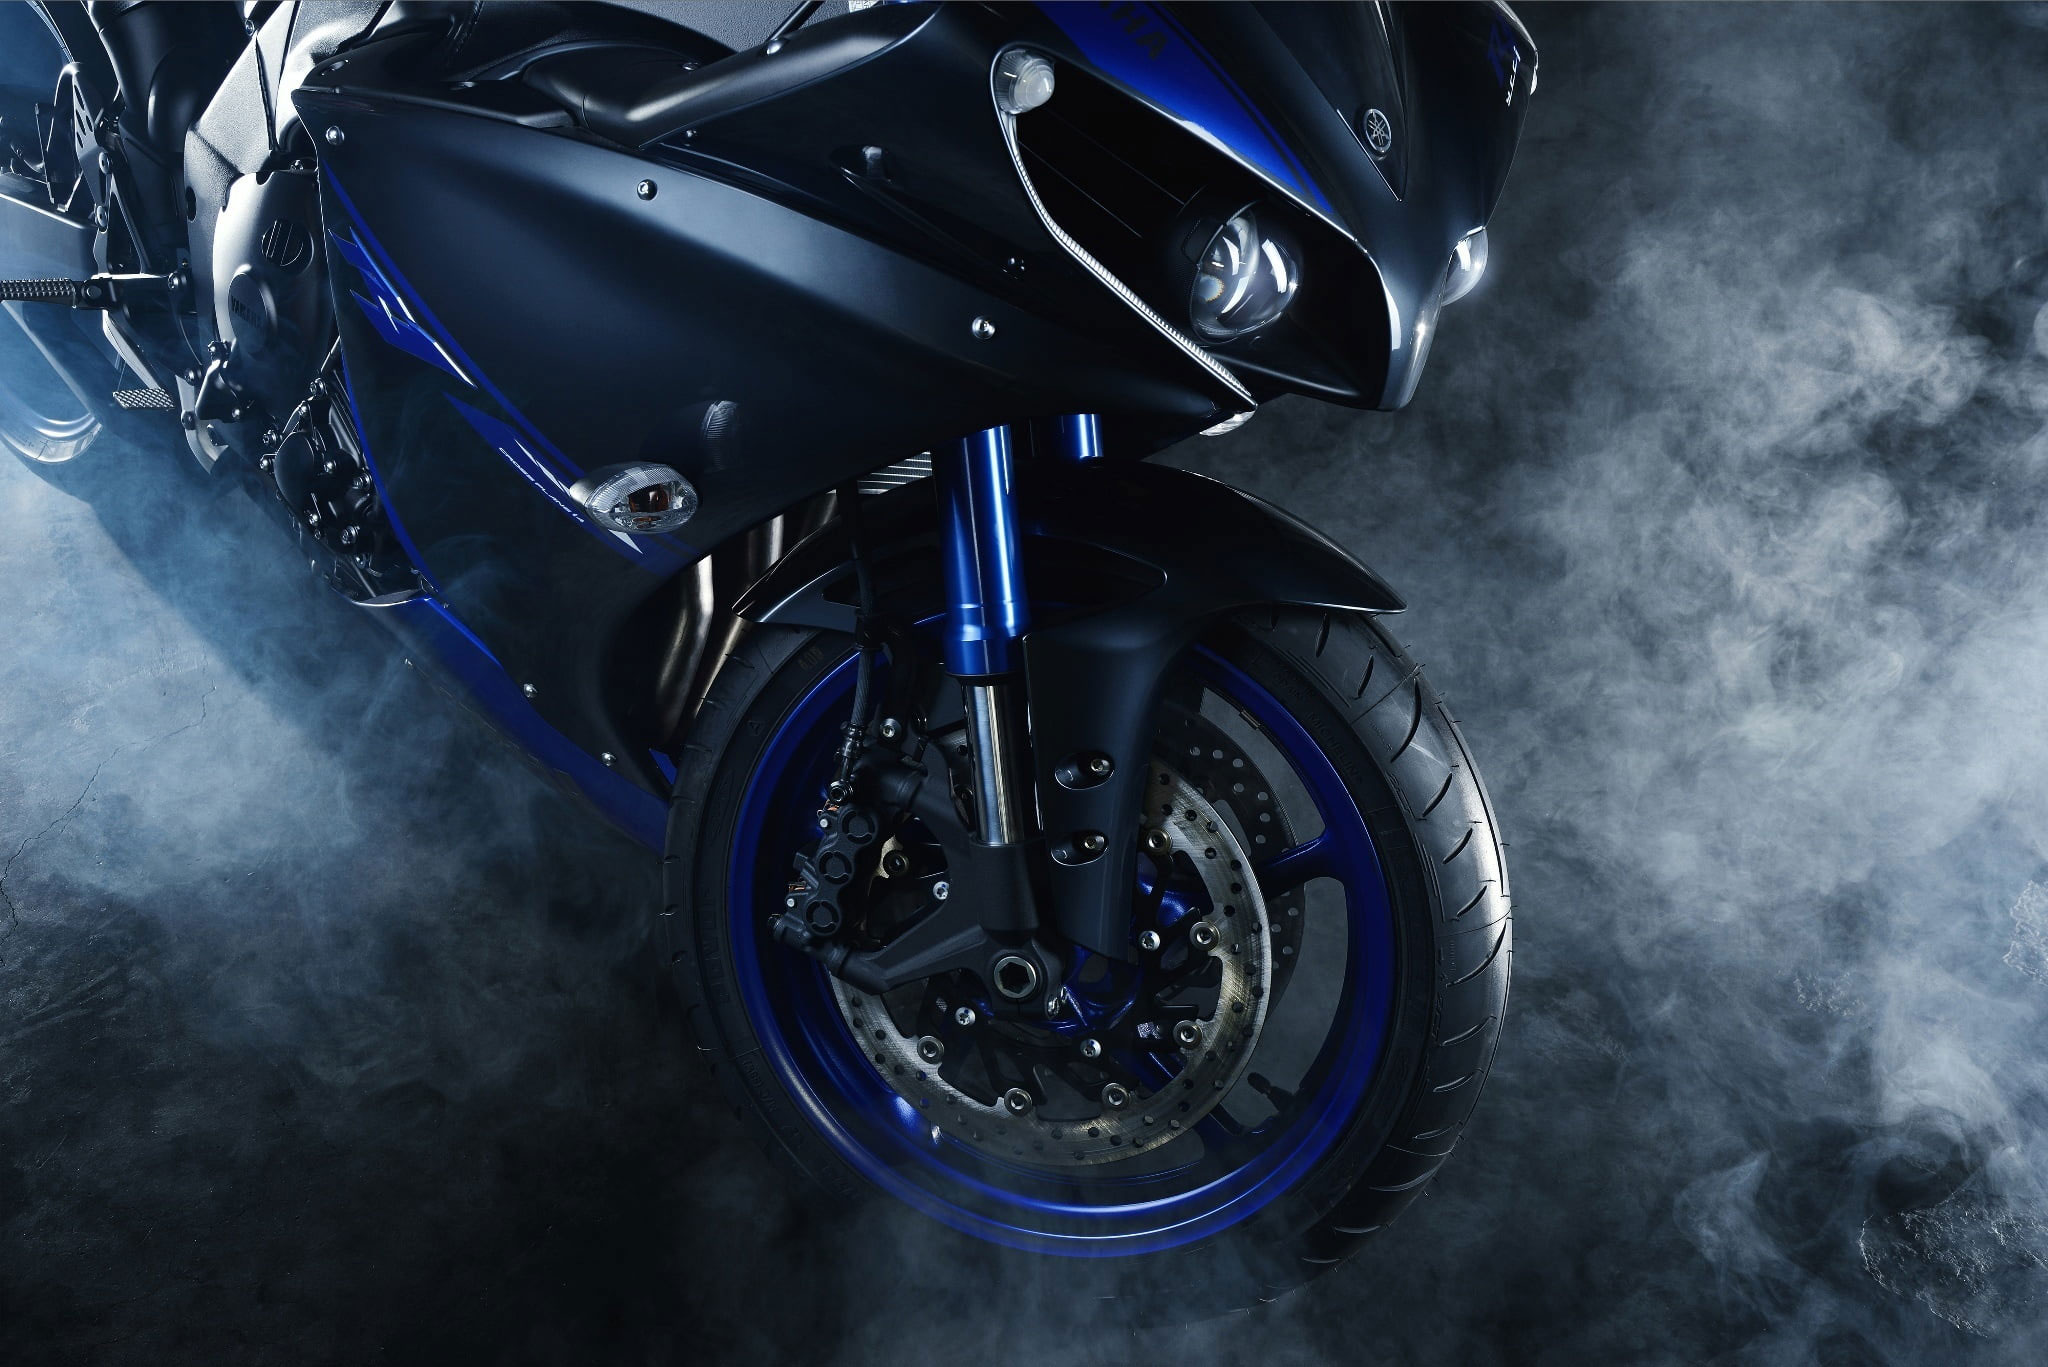 Black And Blue Sports Bike Wallpaper, Motorcycle, Motorbike, Yamaha YZF R1  - Wallpaperforu